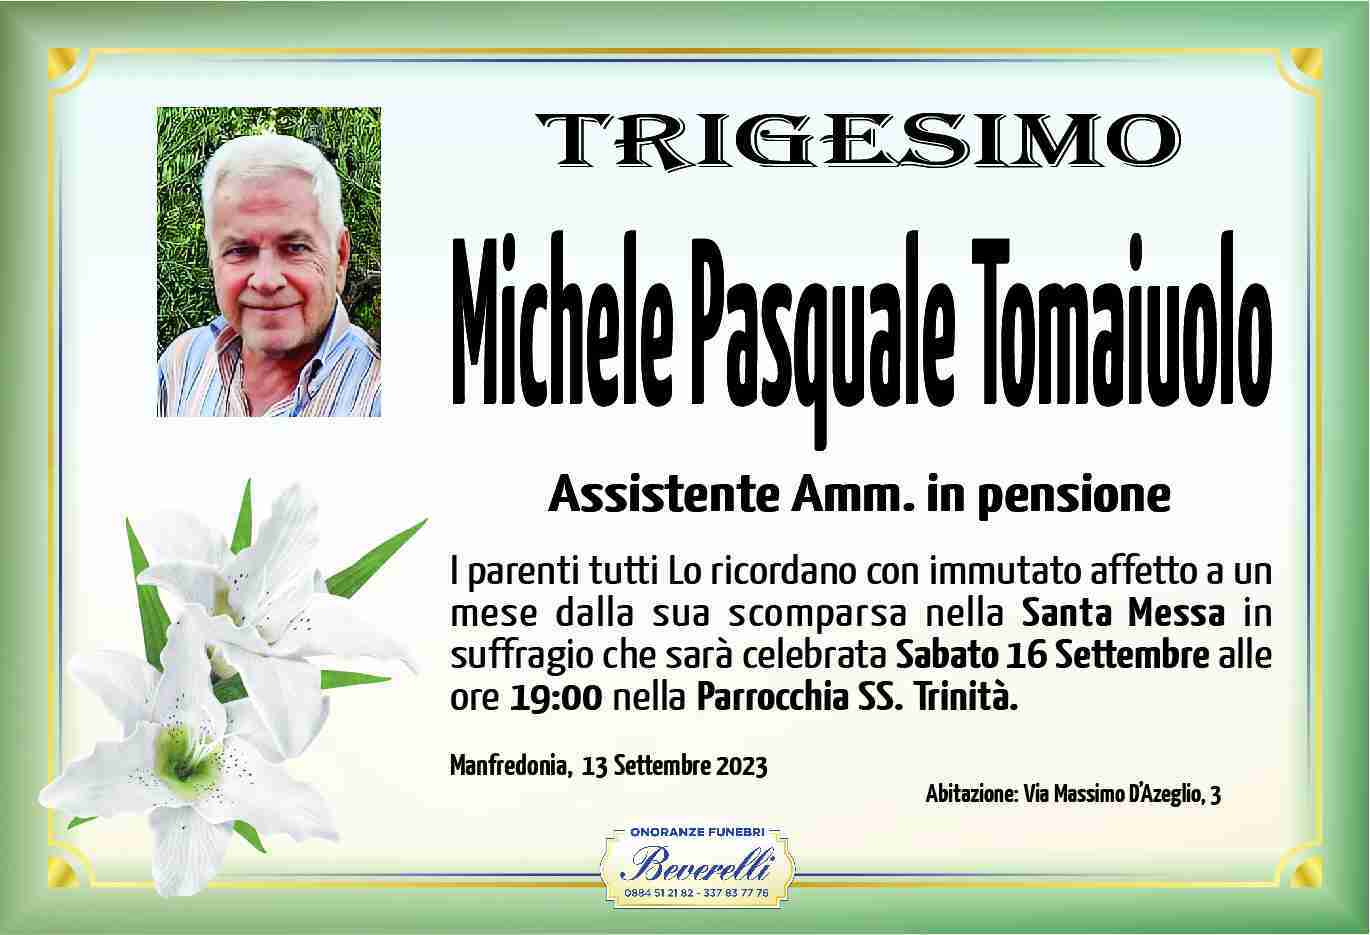 Michele Pasquale Tomaiuolo